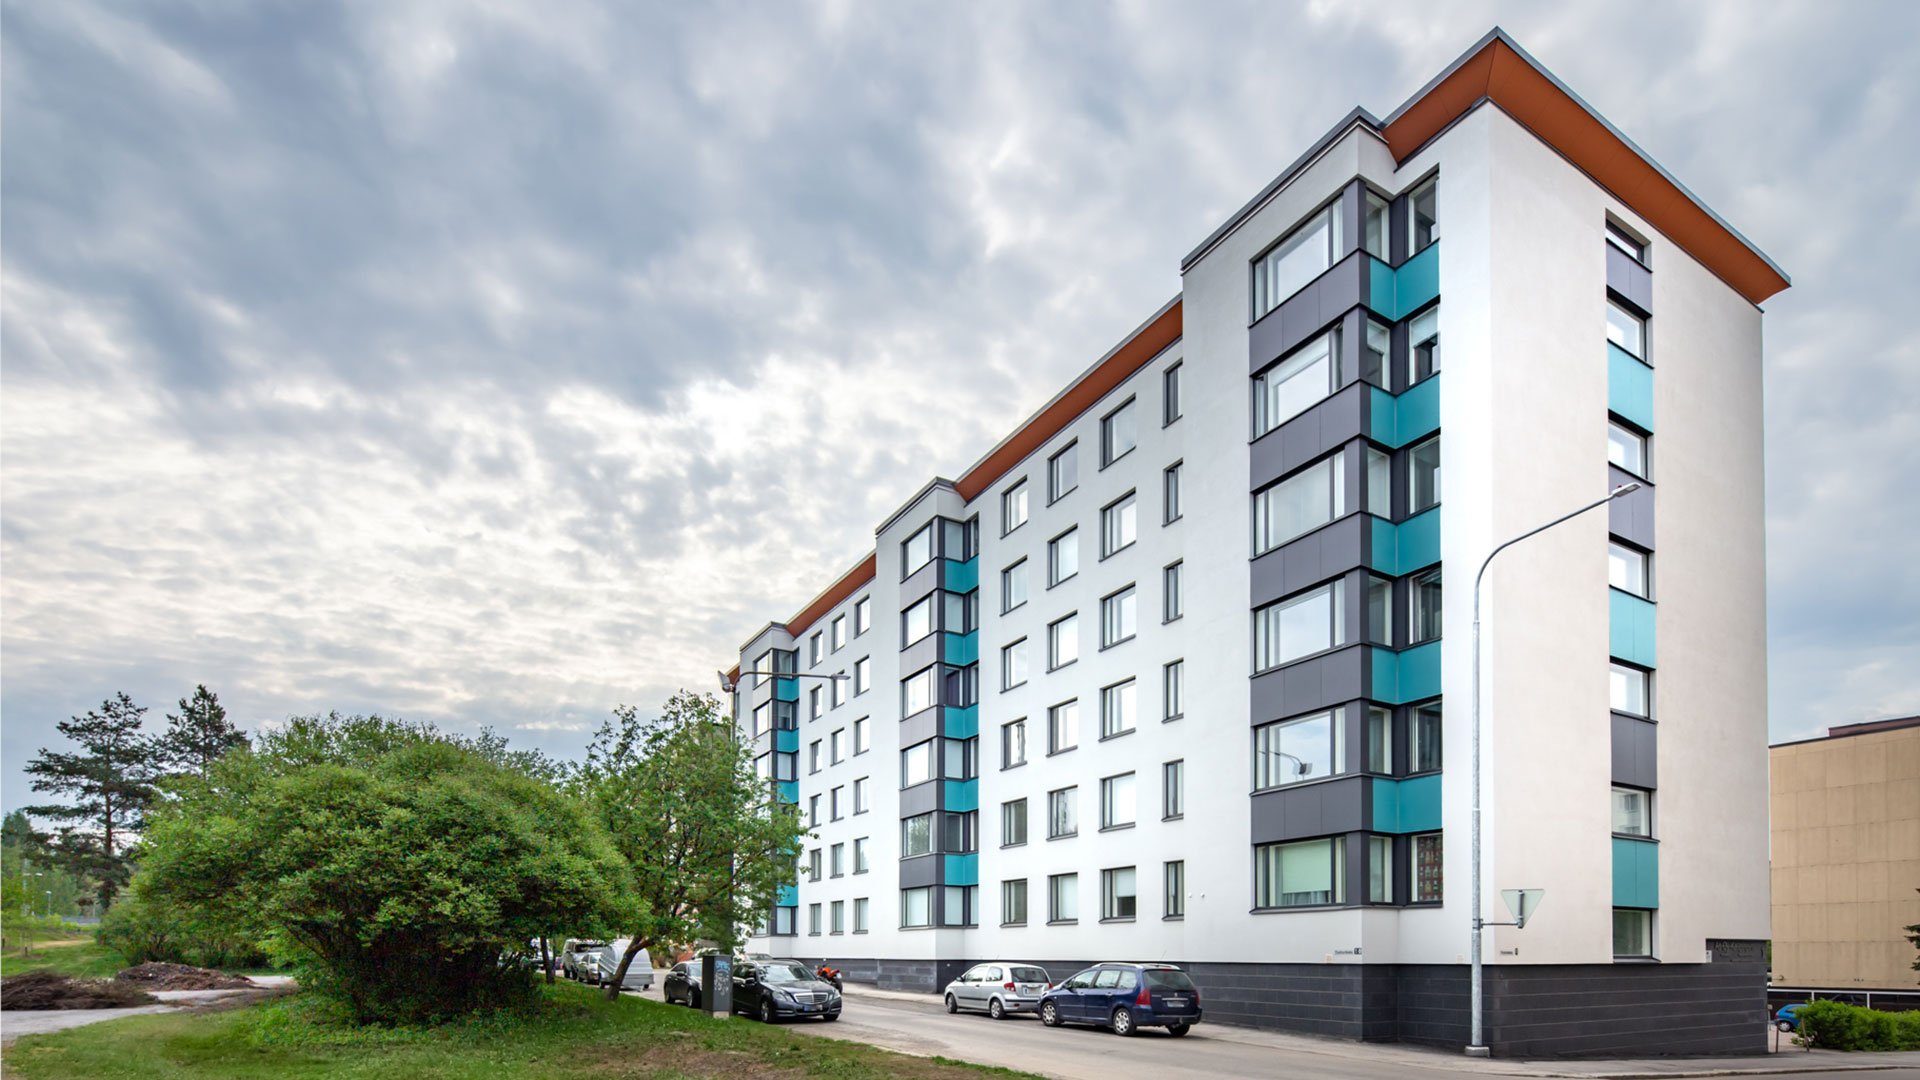 Housing company As. Oy Kaupinpirtti, Tampere